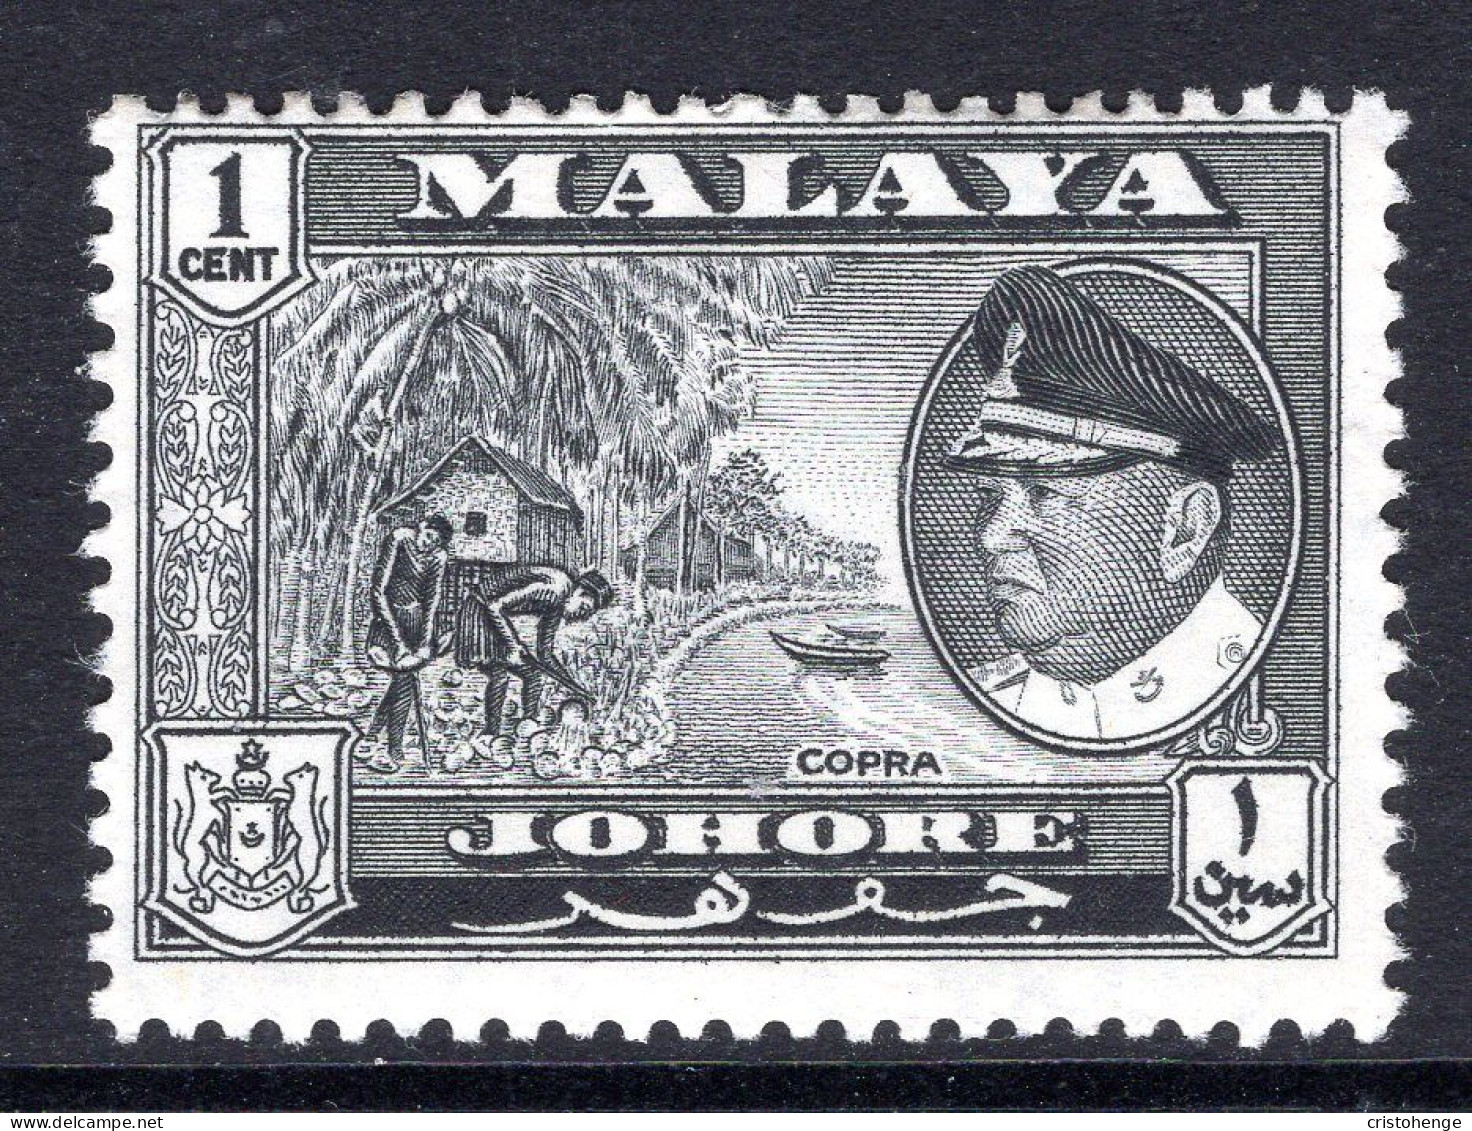 Malaysian States - Johore - 1960 Pictorials - 1c Copra HM (SG 155) - Johore